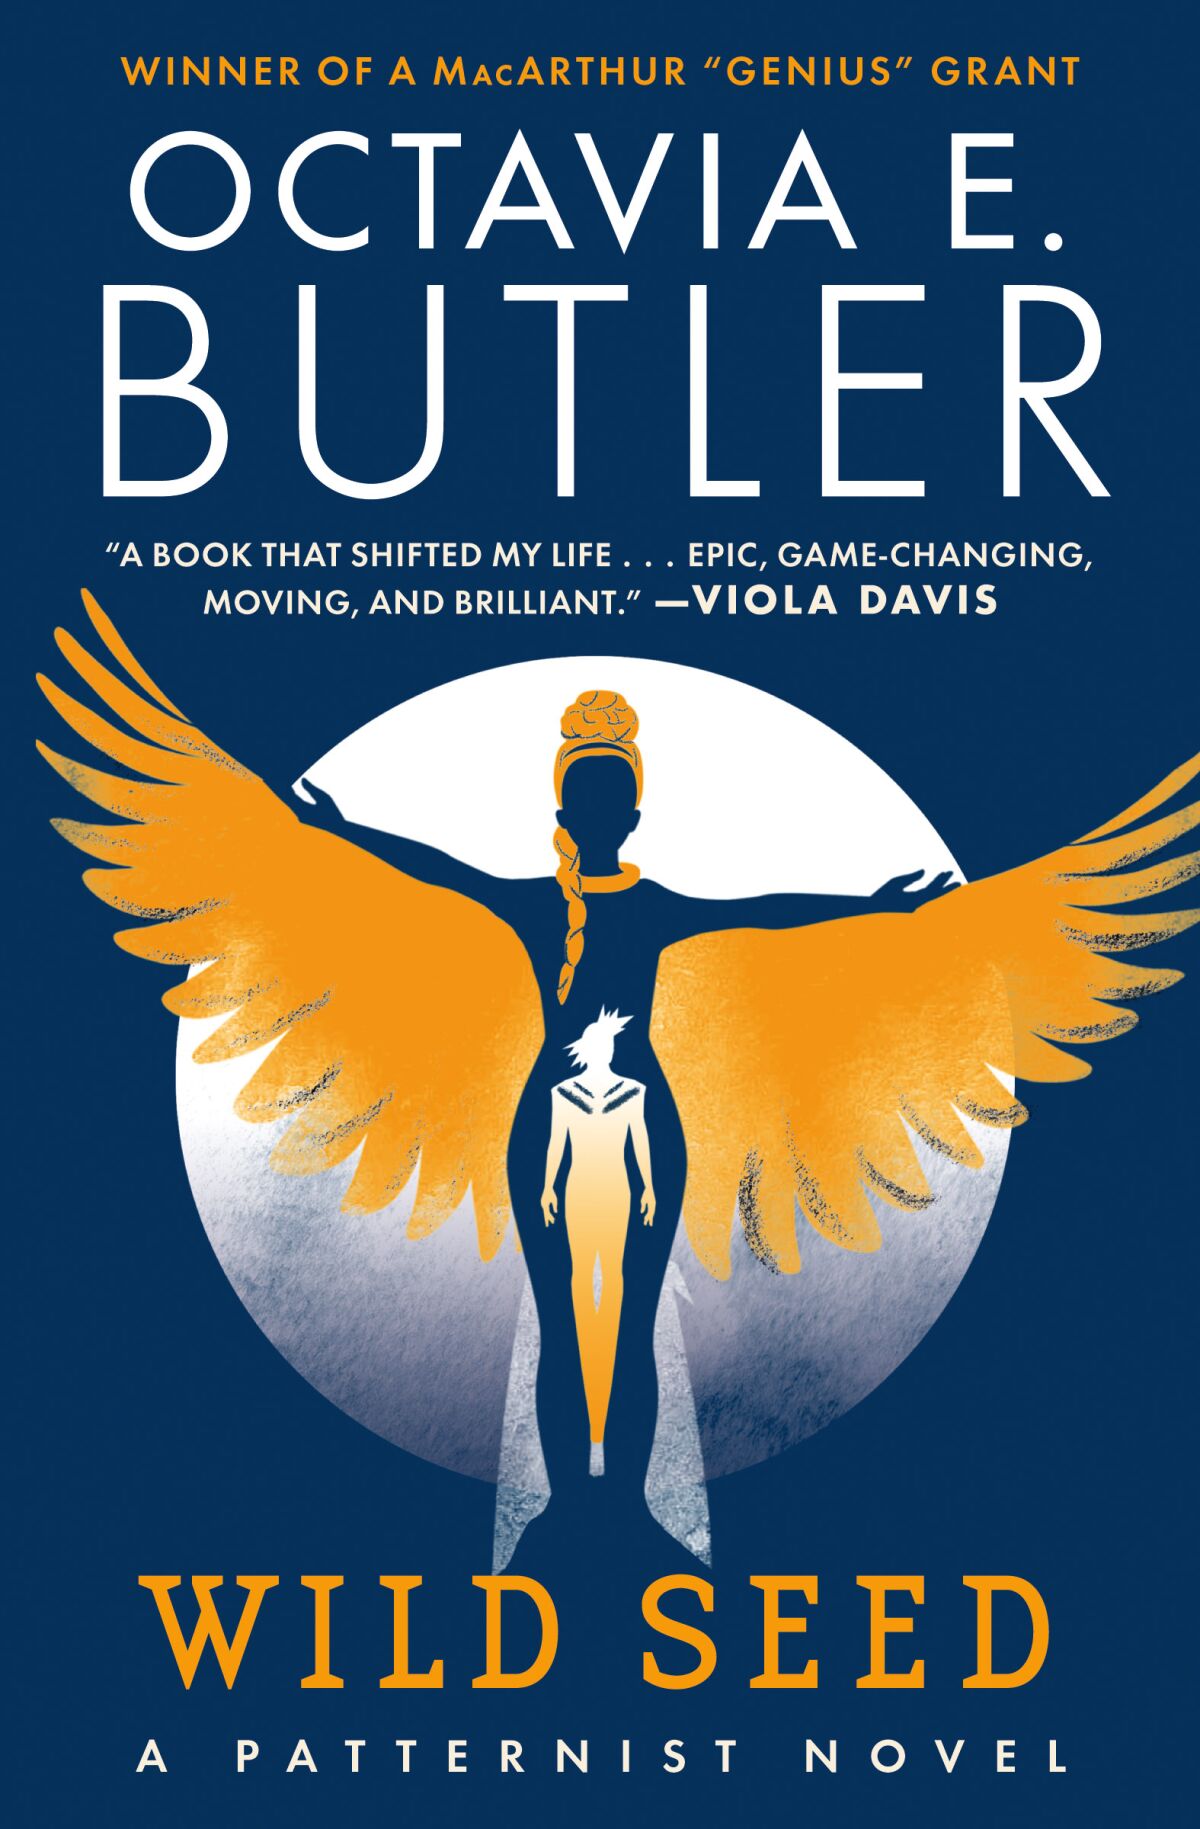 The cover of Octavia E. Butler's "Wild Seed."